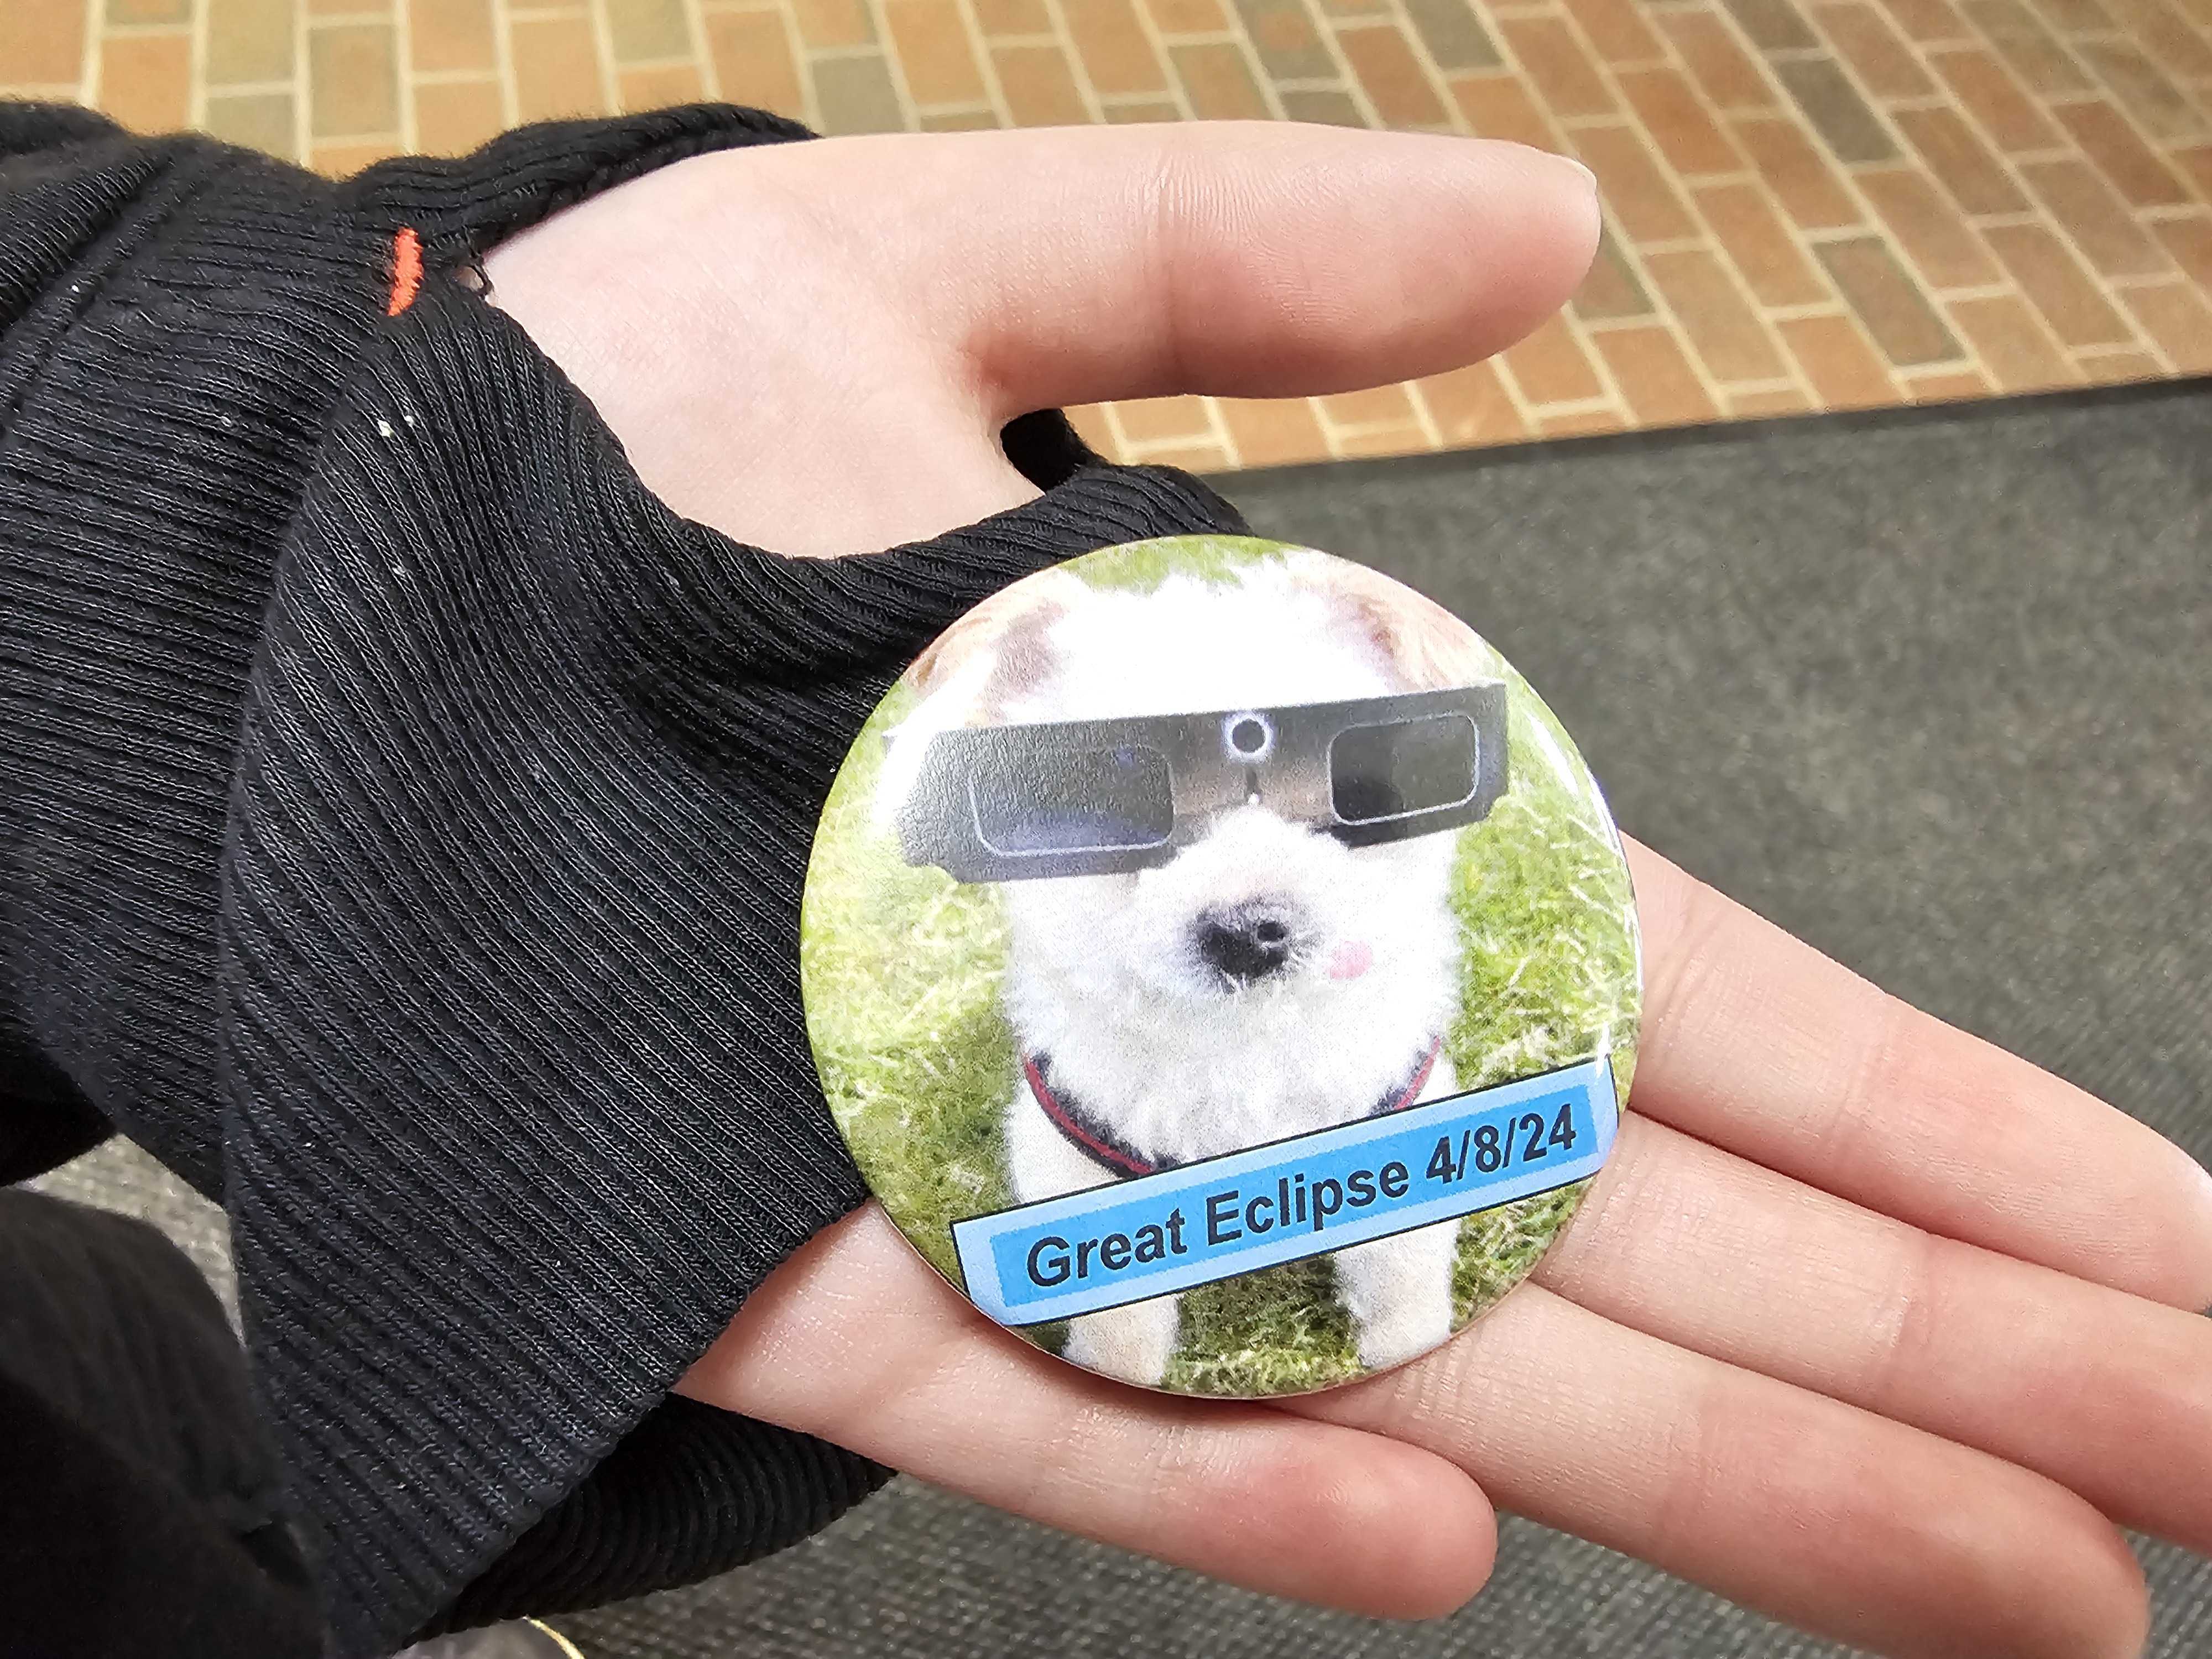 Dated Memorabilia, A Dog Wearing Solar Glasses